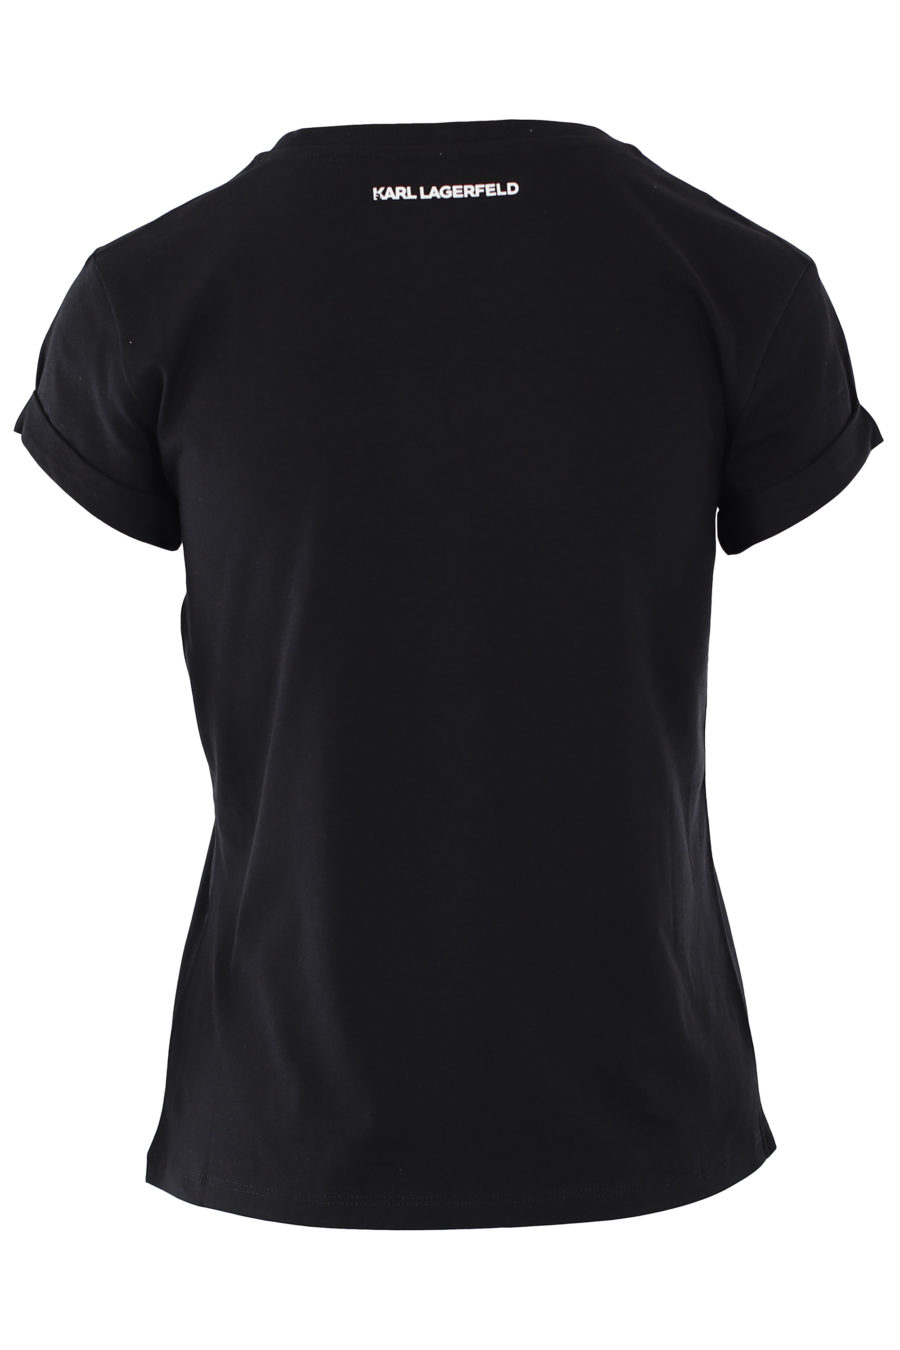 Camiseta negra con logo y bolsillo - IMG 1296